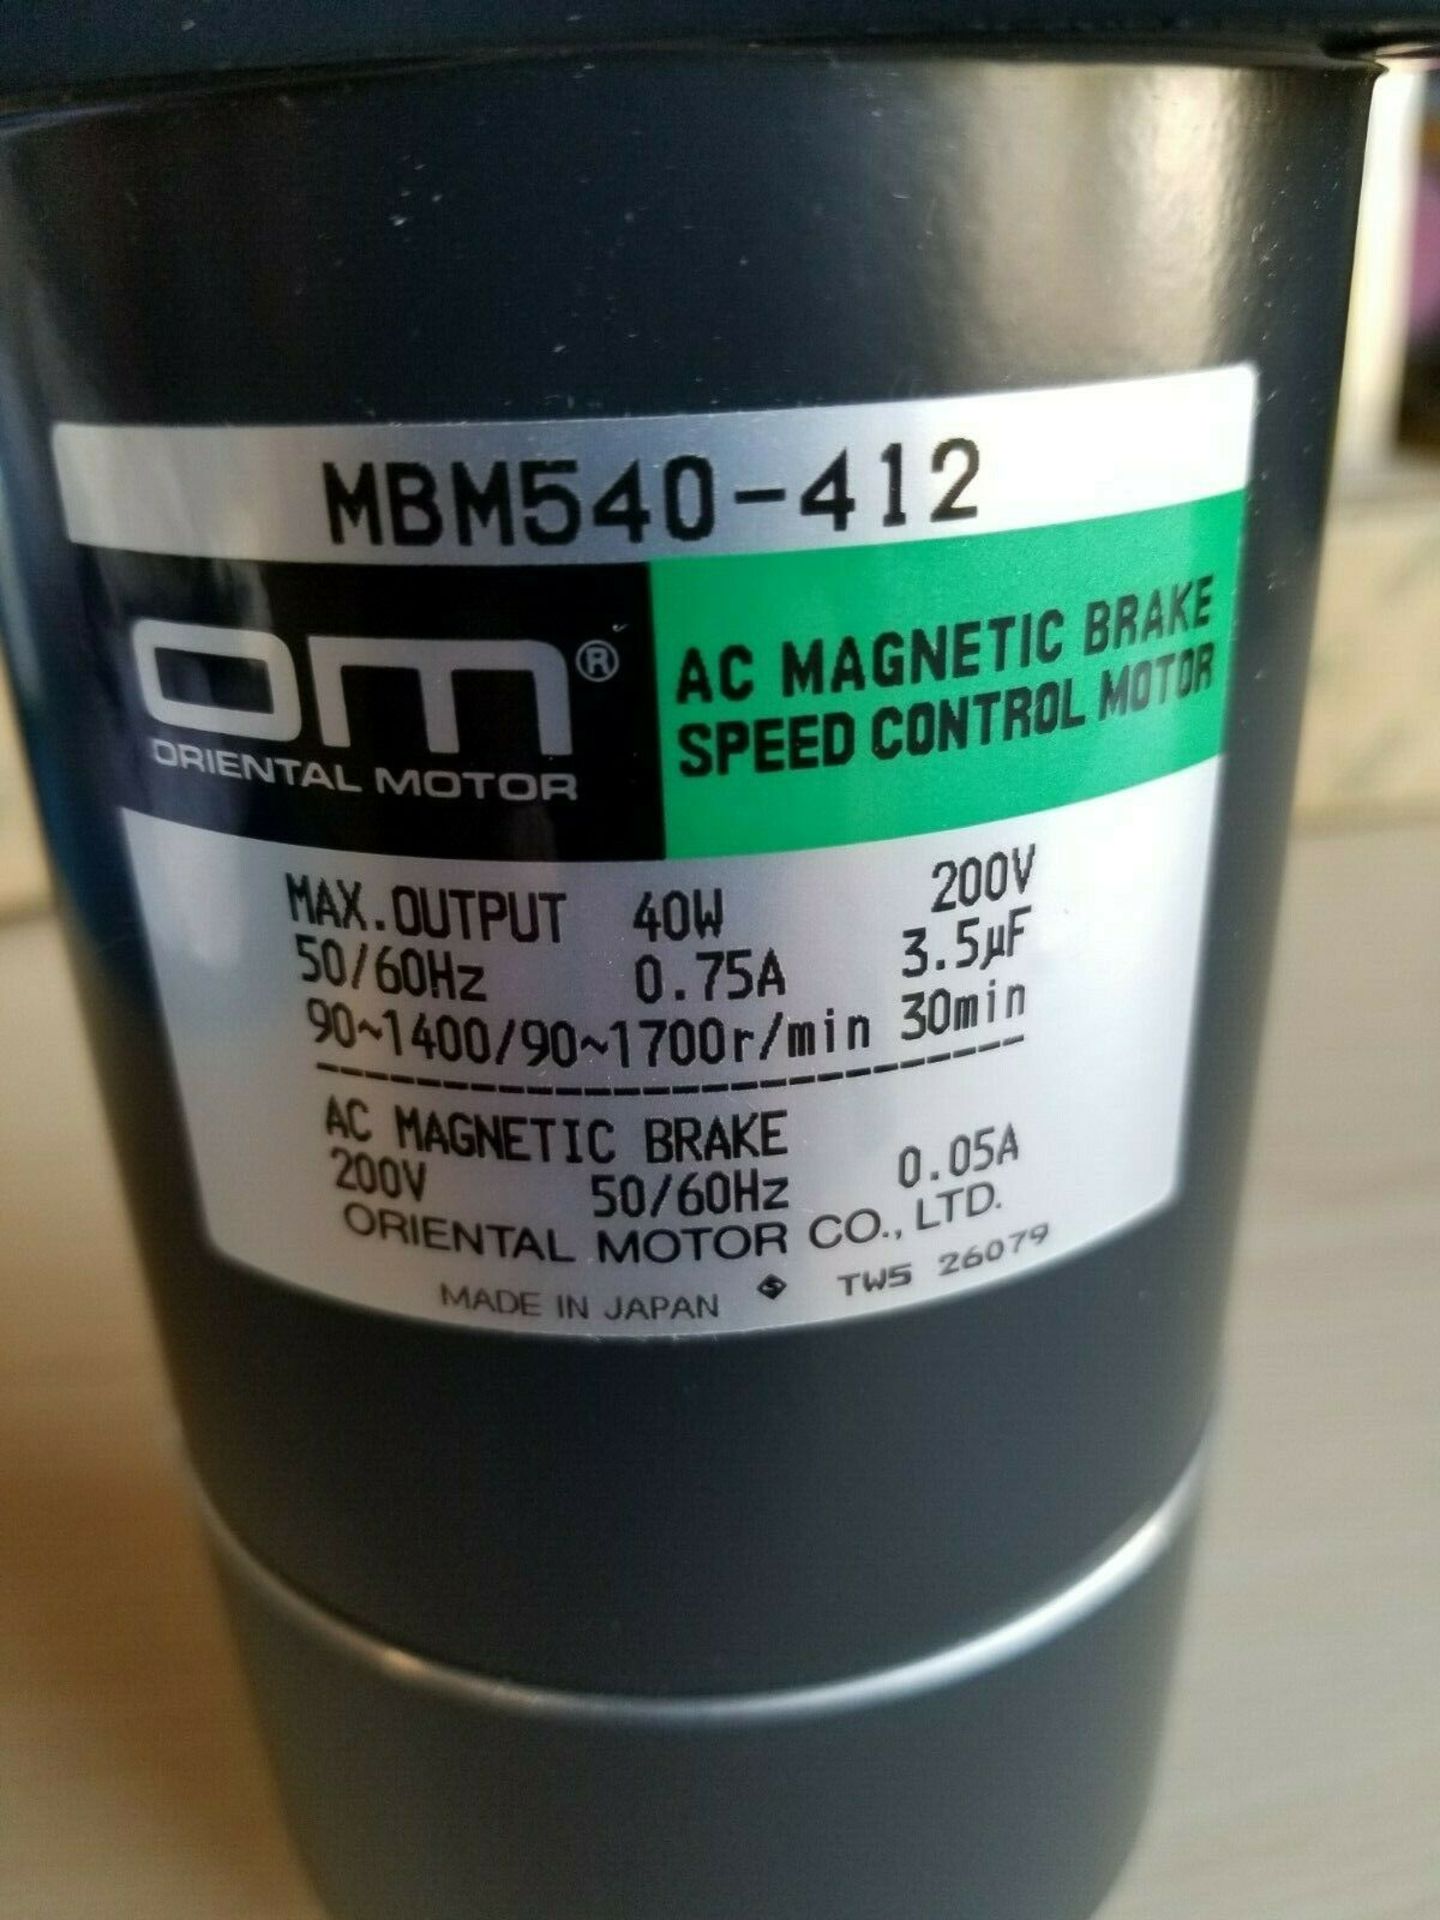 New Oriental Motor AC Magnetic Brake Speed Control Motor & Controller - Image 8 of 11